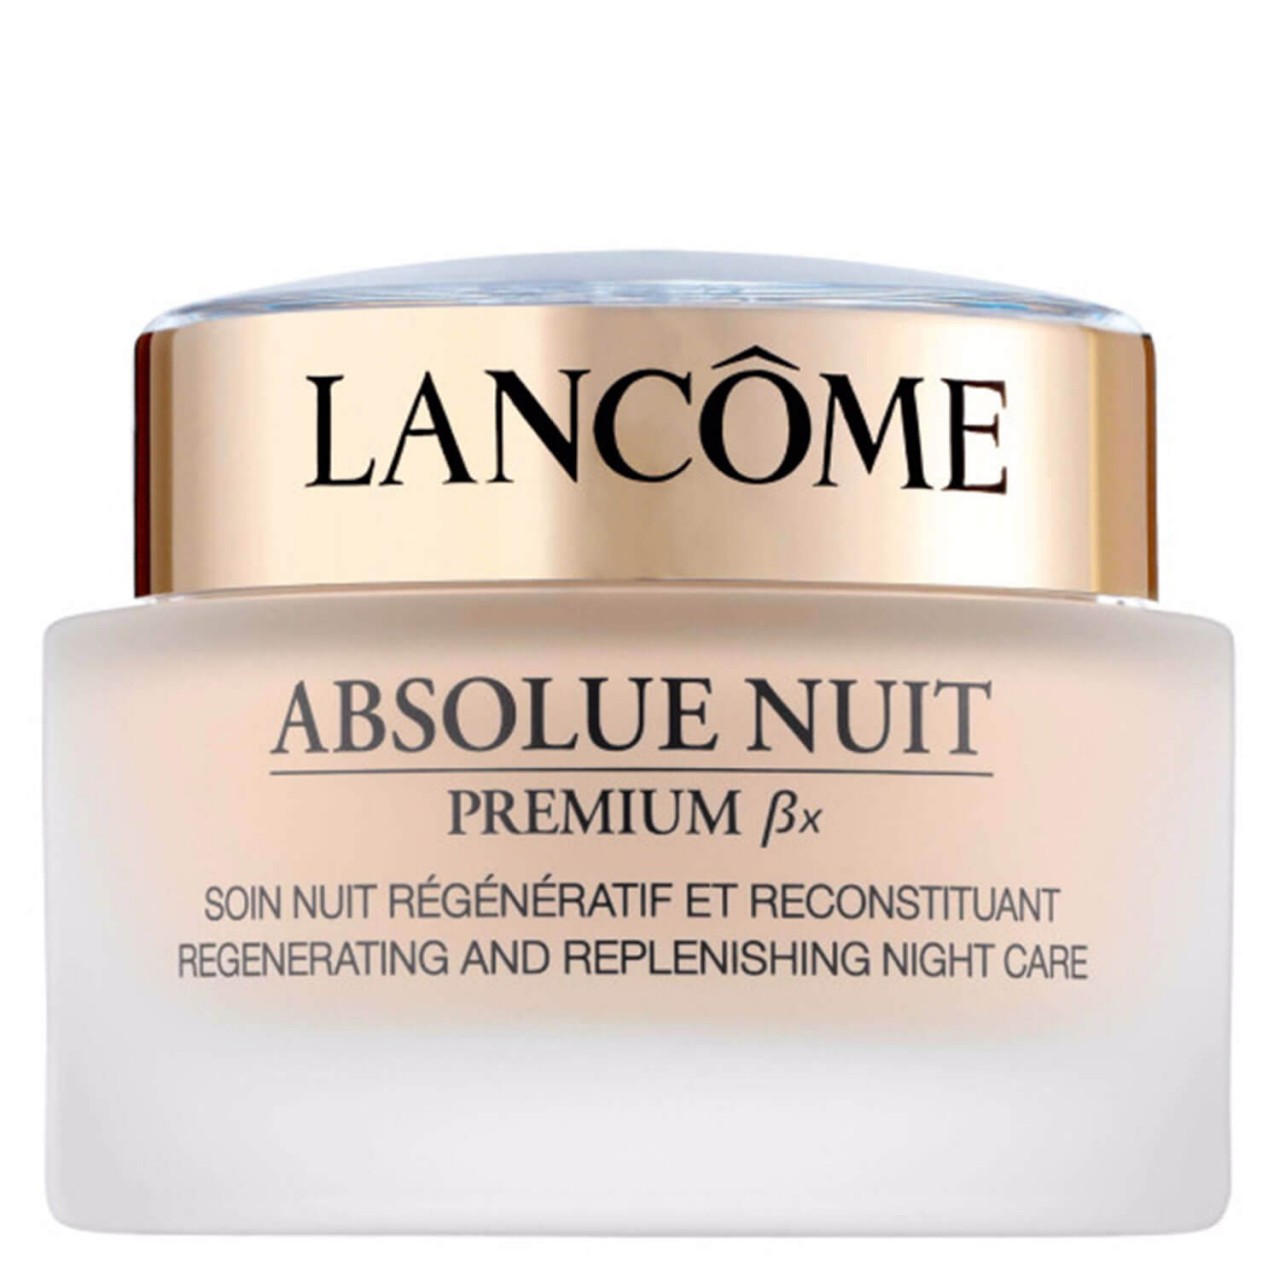 ABSOLUE - Nuit Premium ßx Regenerating and Replenishing Care von Lancôme